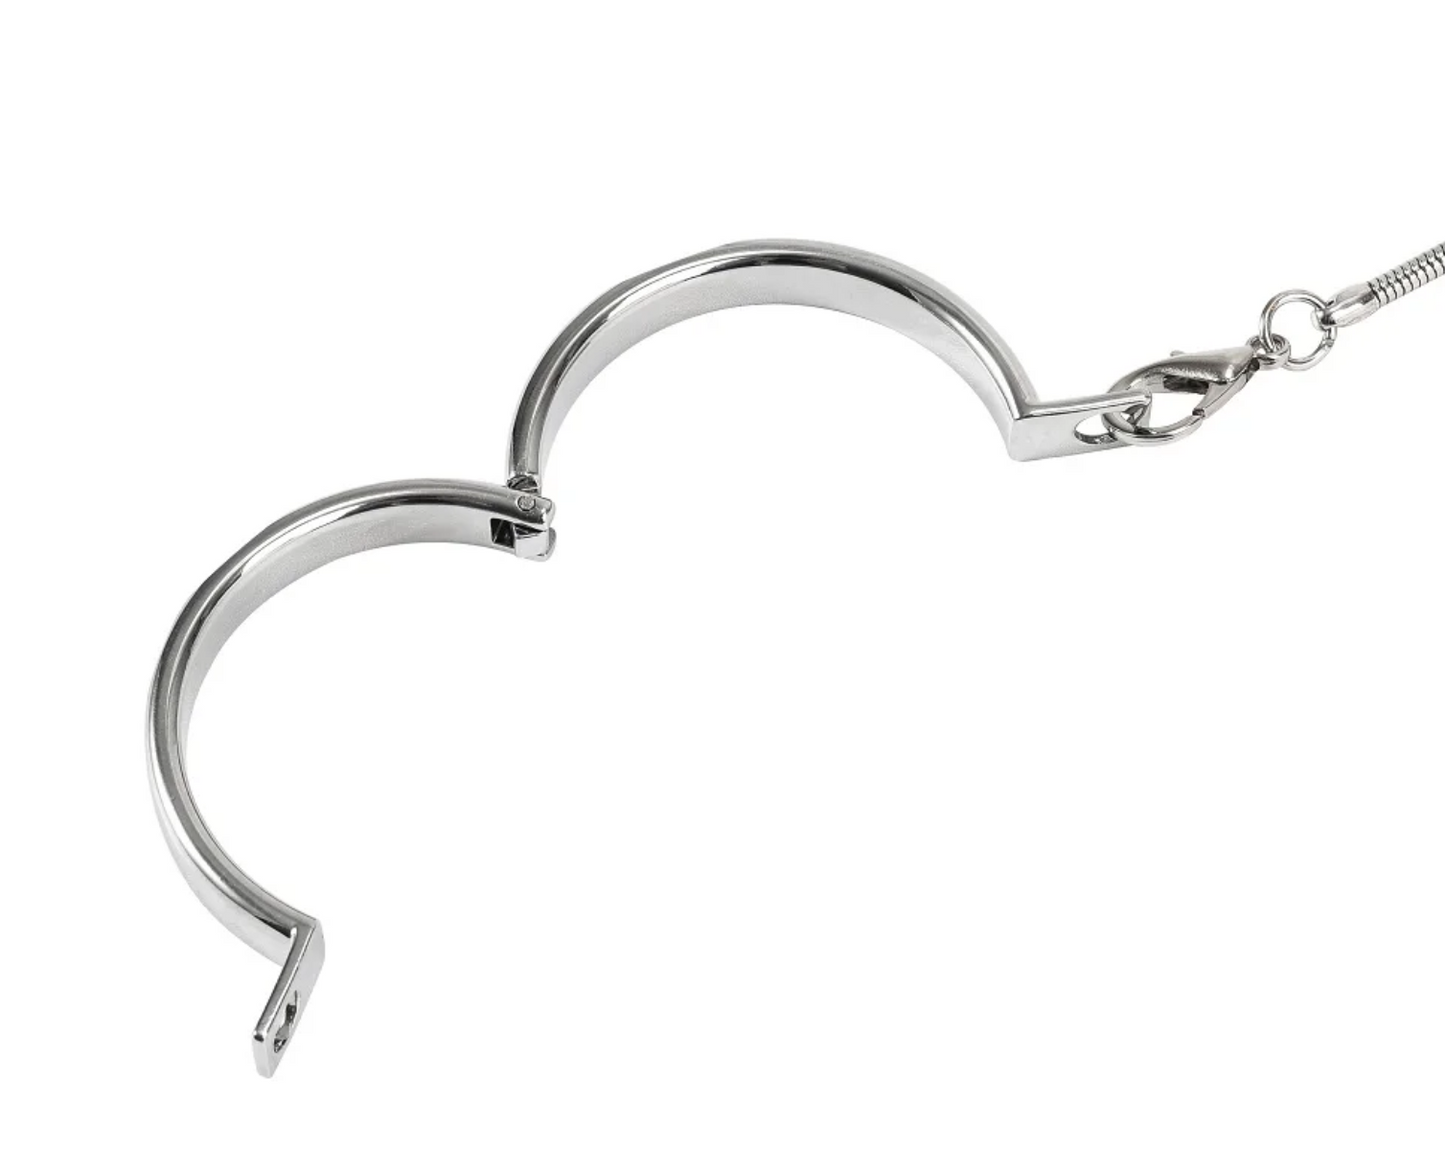 Metal Locking Genital Collar and Chain Lead